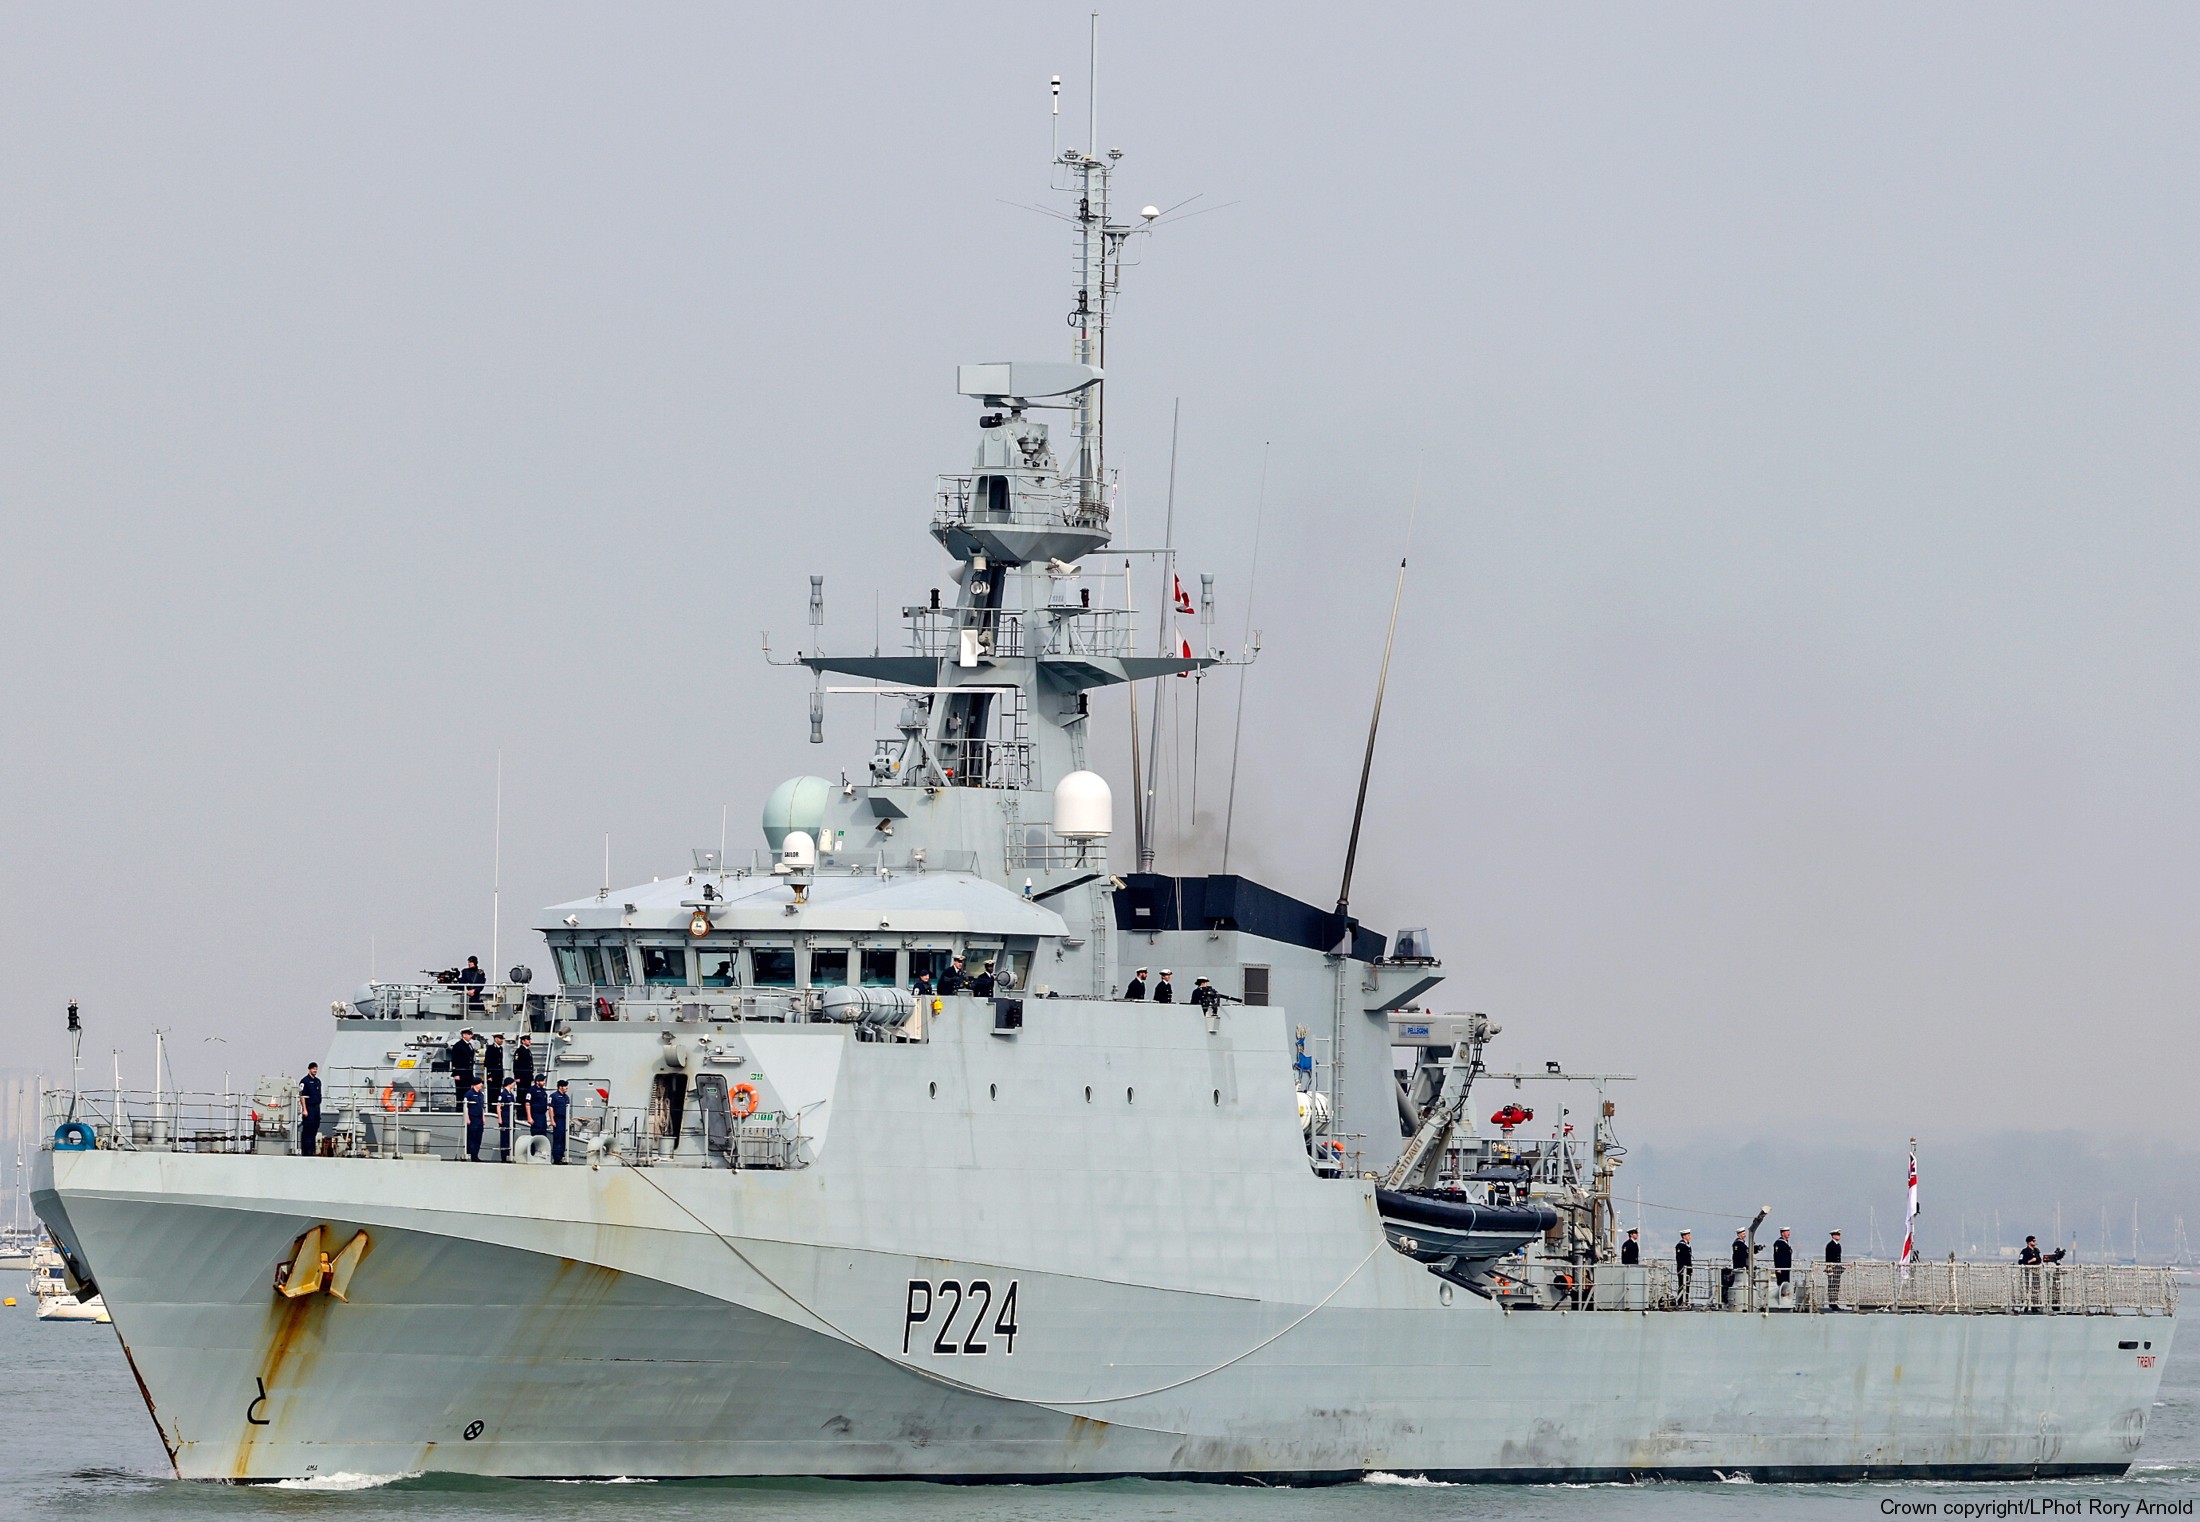 p224 hms trent river class offshore patrol vessel opv royal navy 45